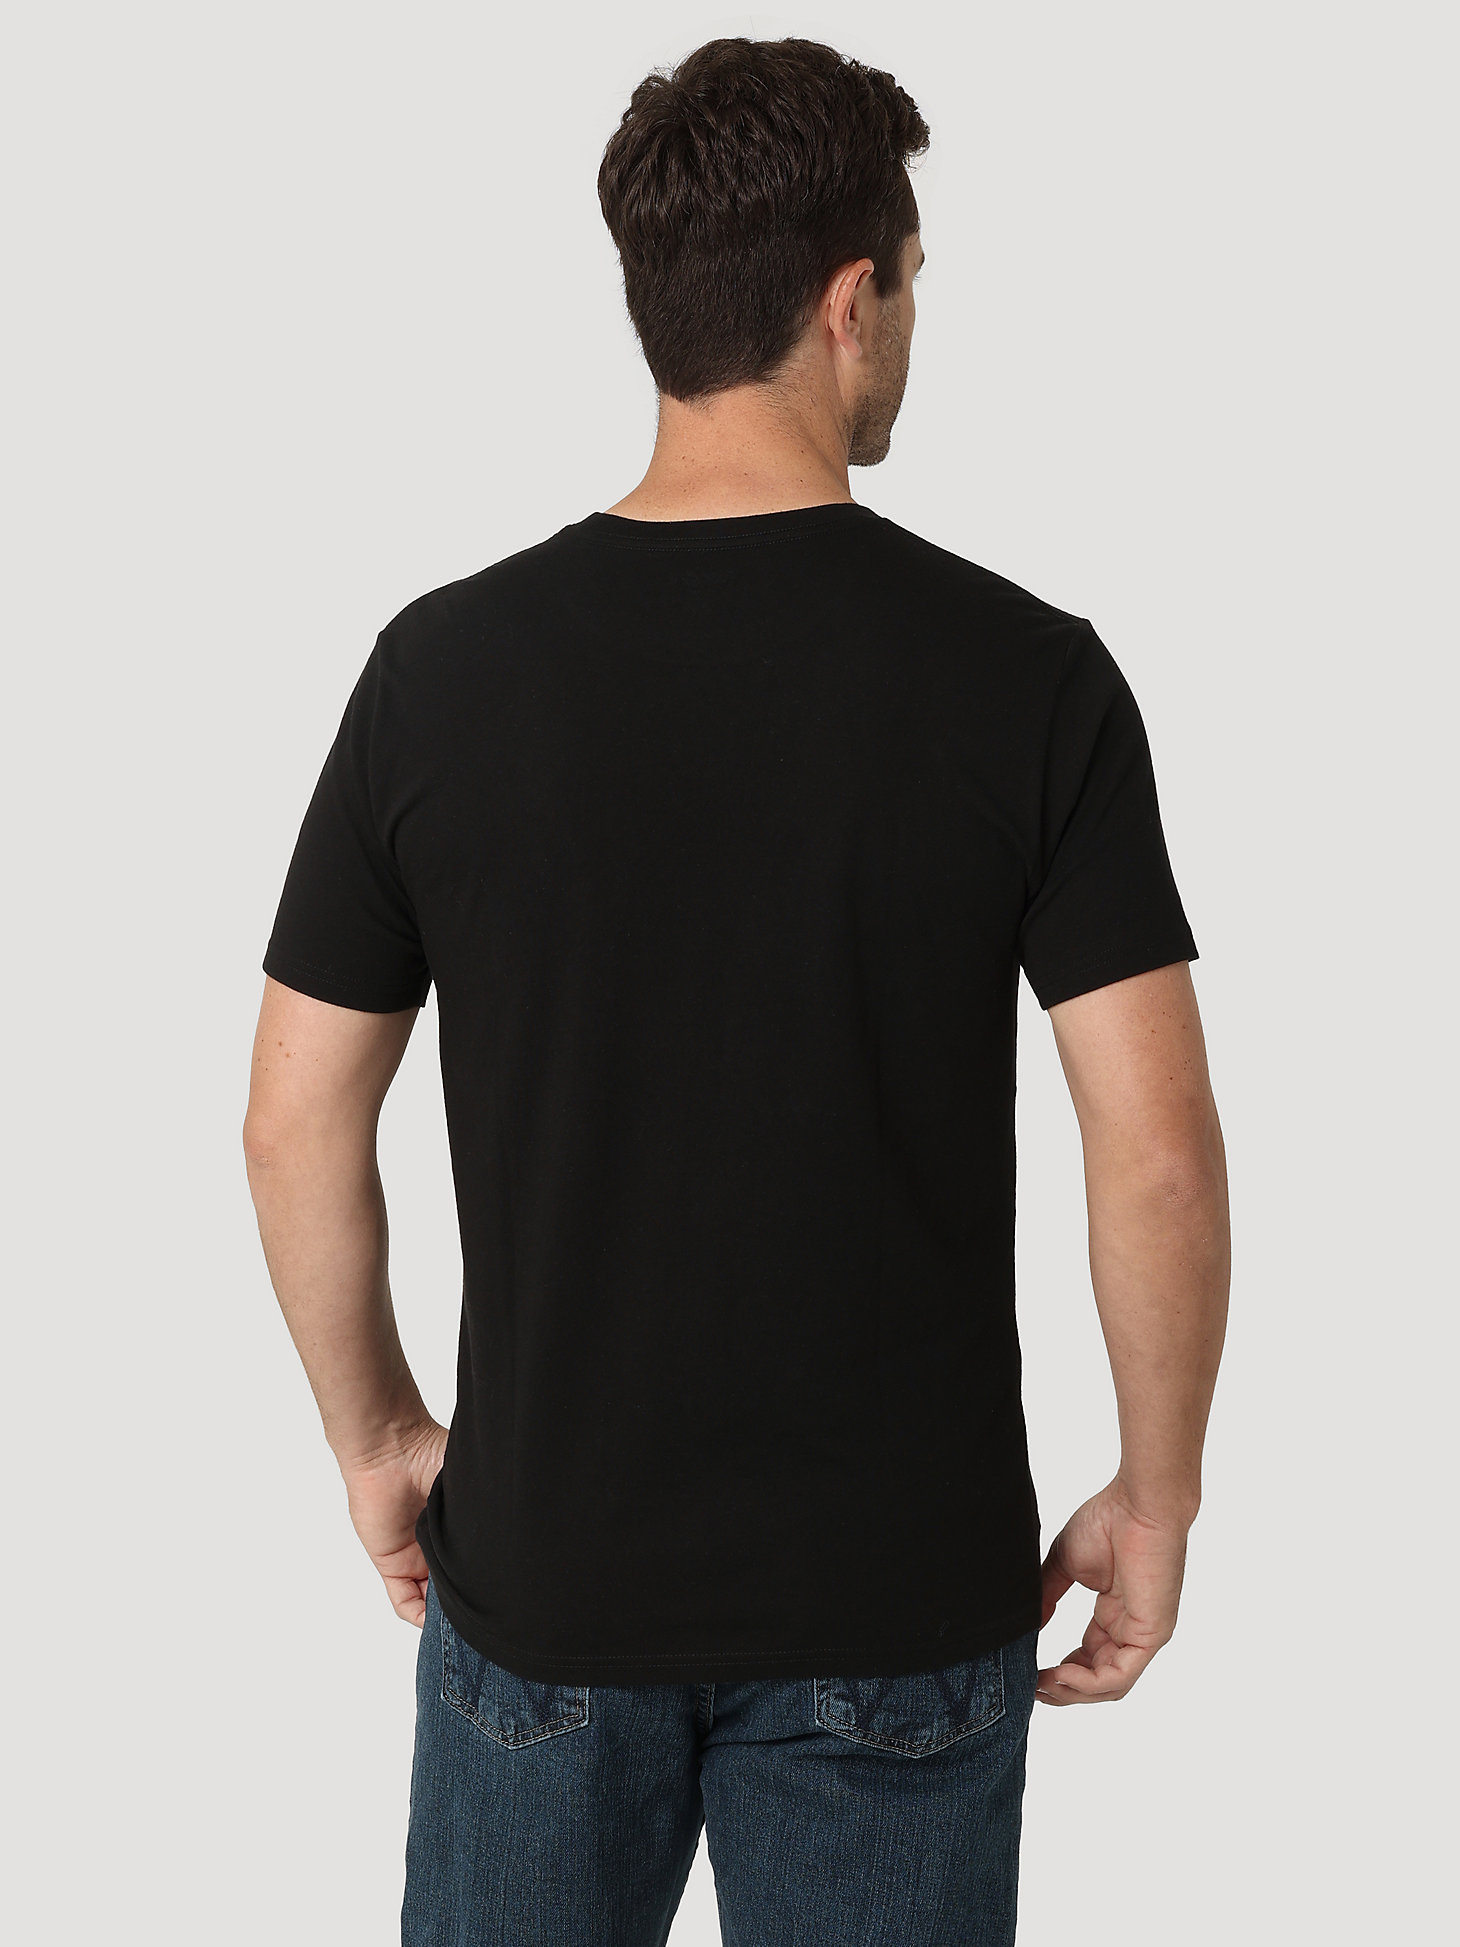 Men's Cowboy Sunset Graphic T-Shirt in Black alternative view 2